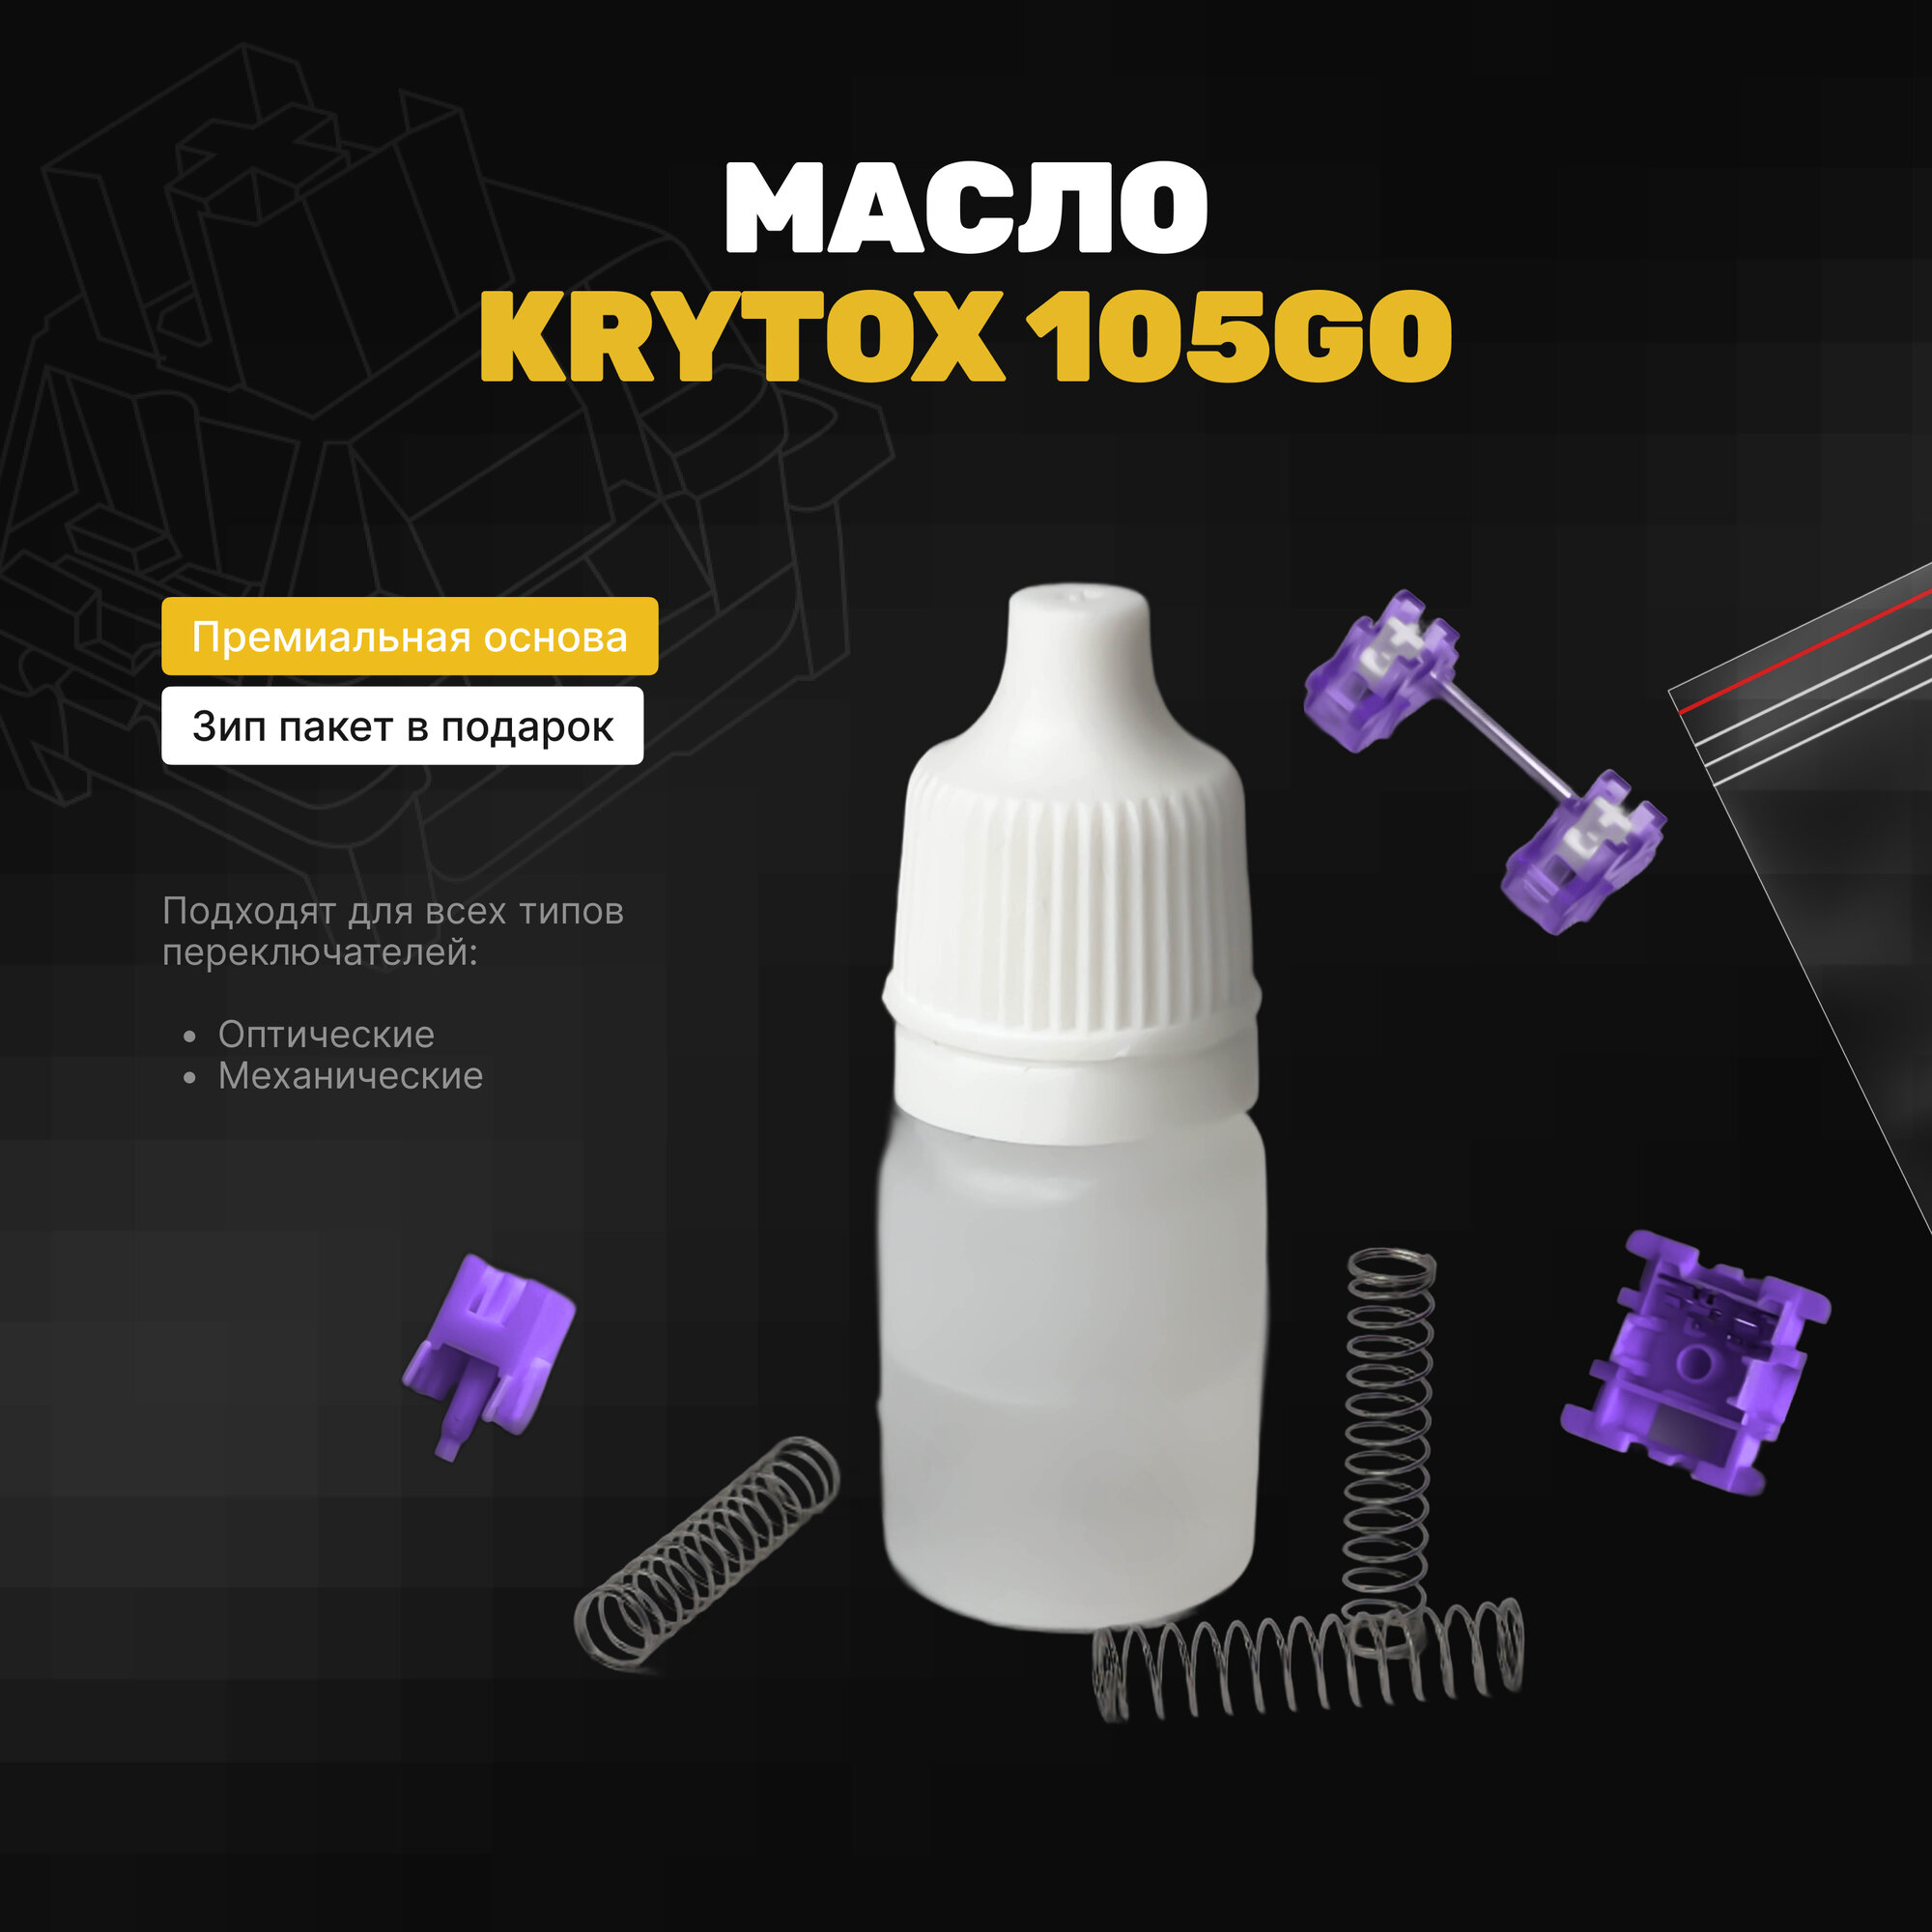 Масло для смазки клавиатуры Krytox 105g0 5гр (DuPont), зип-пакет